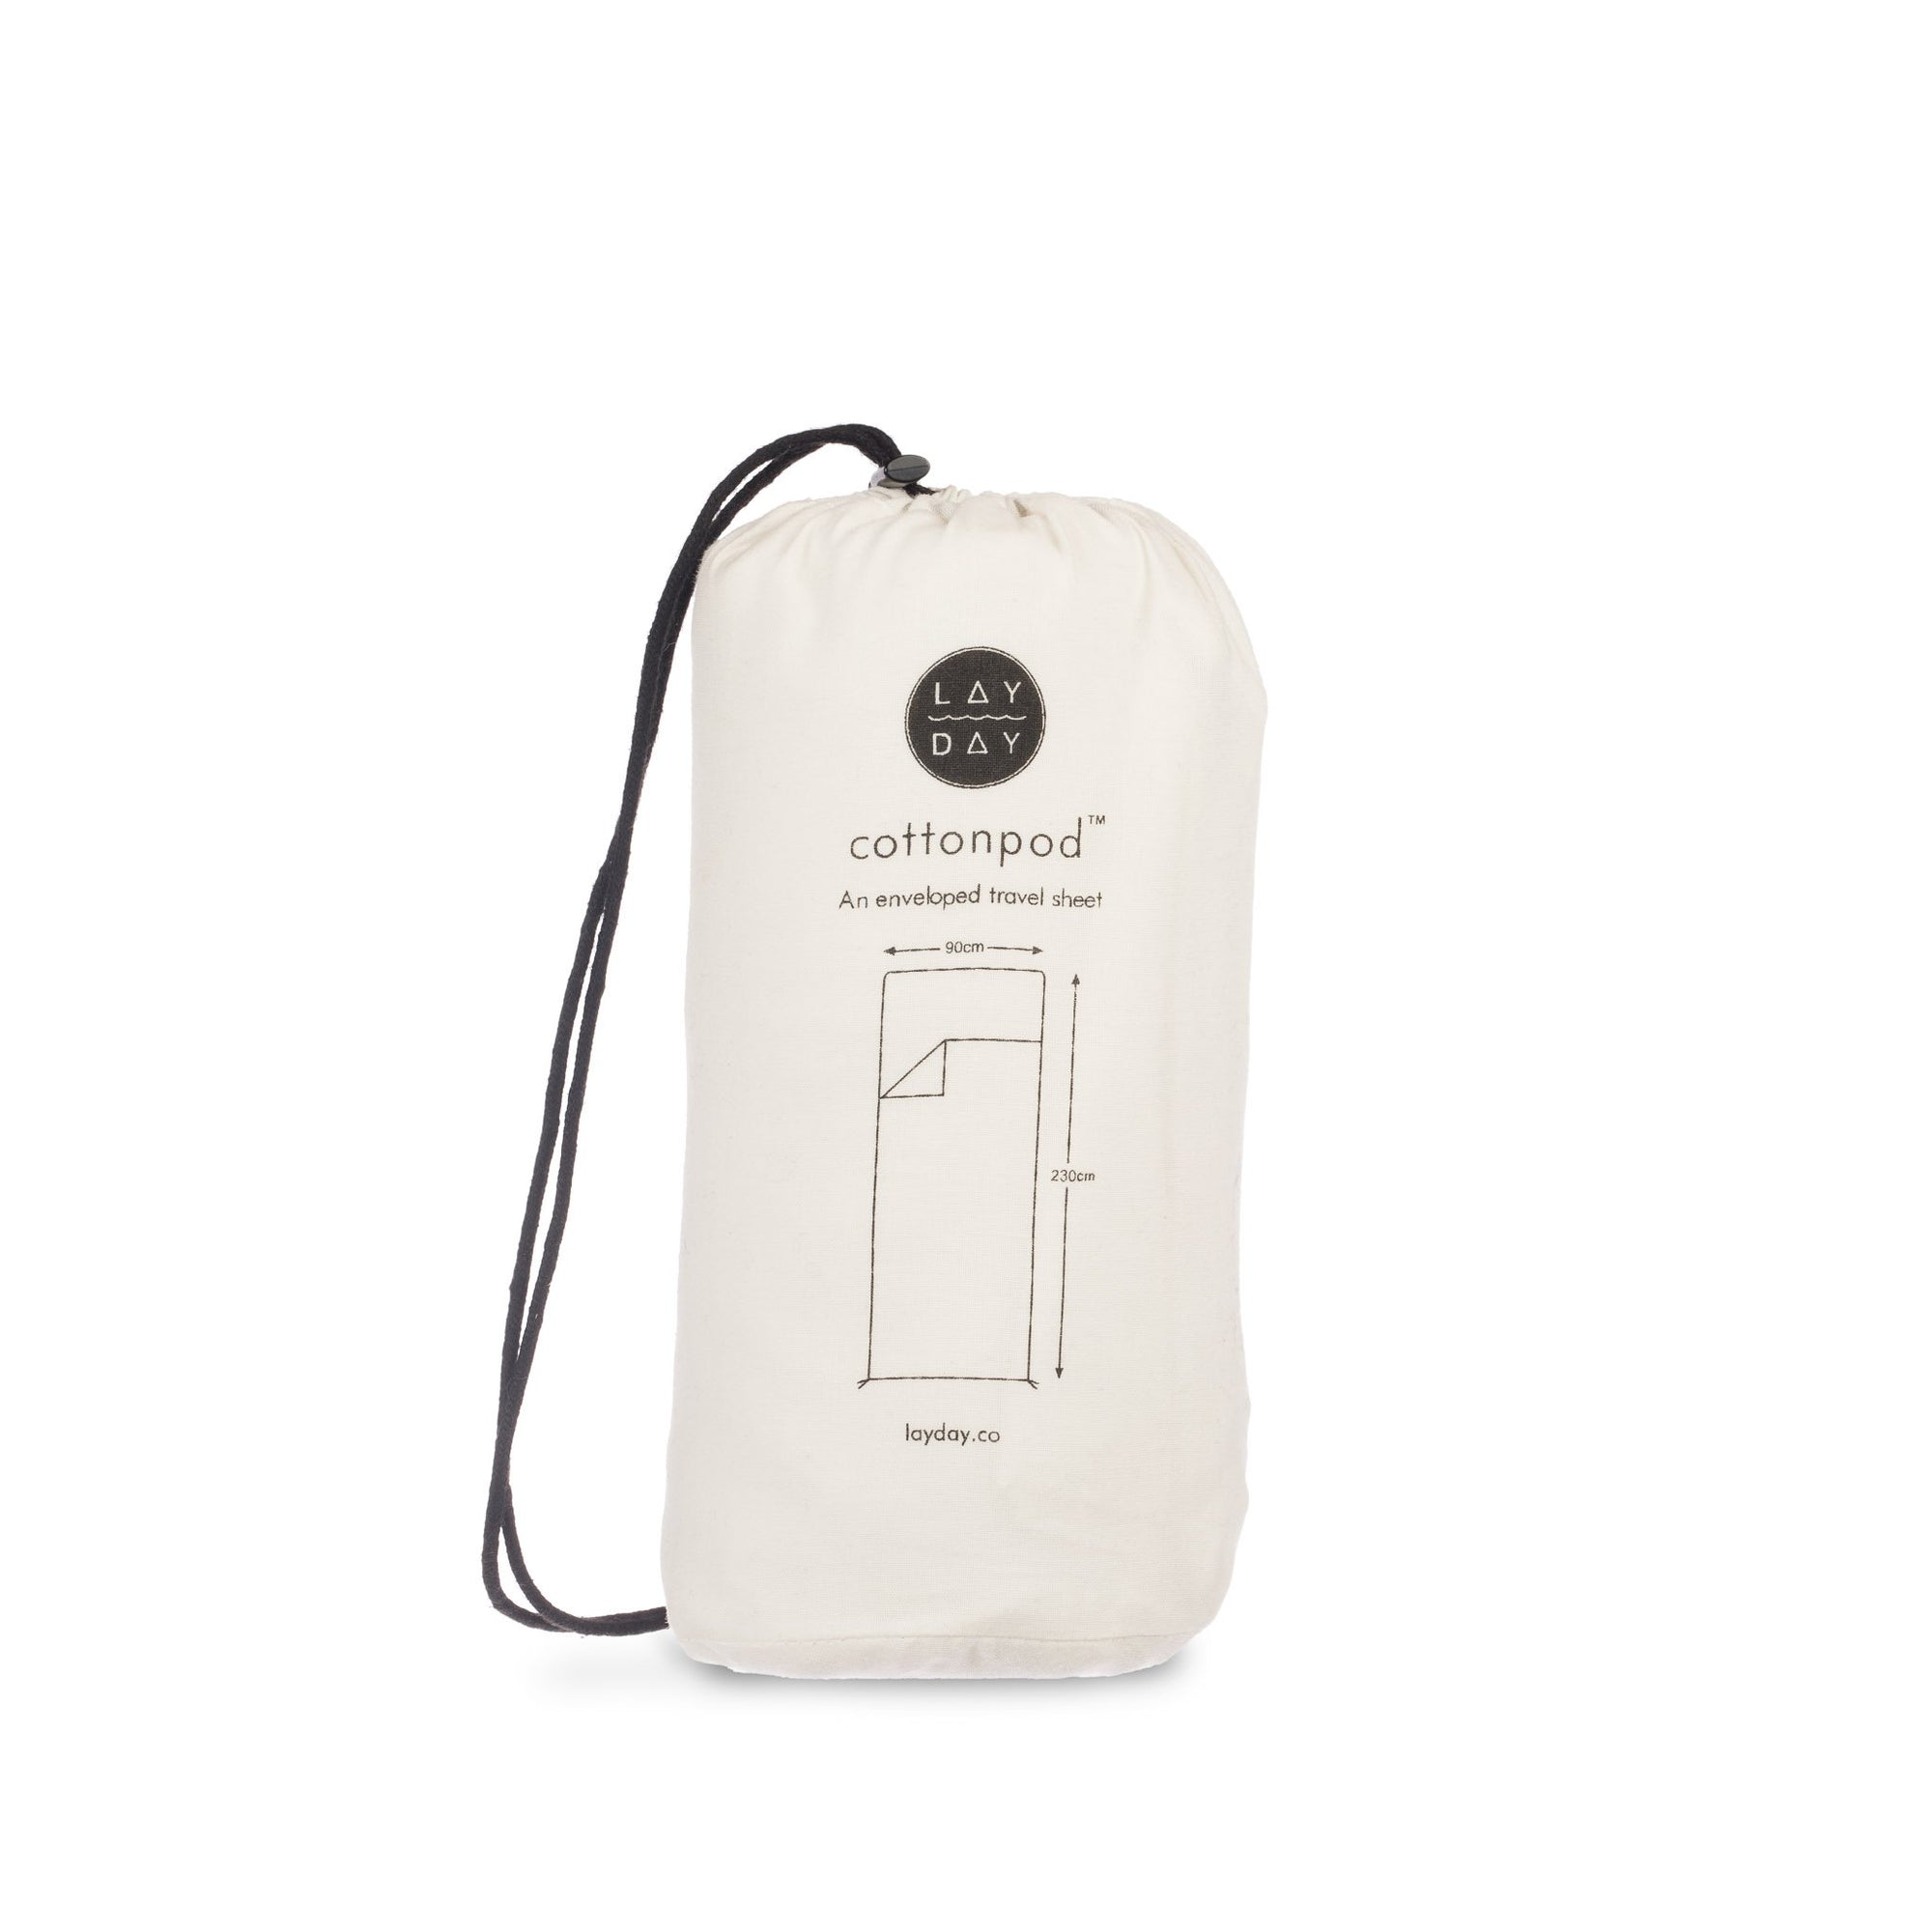 UK Soft Sleeping Bag Liner Travel Sheet Camping Sleep Bag Prevent Dirty  220*90cm | eBay